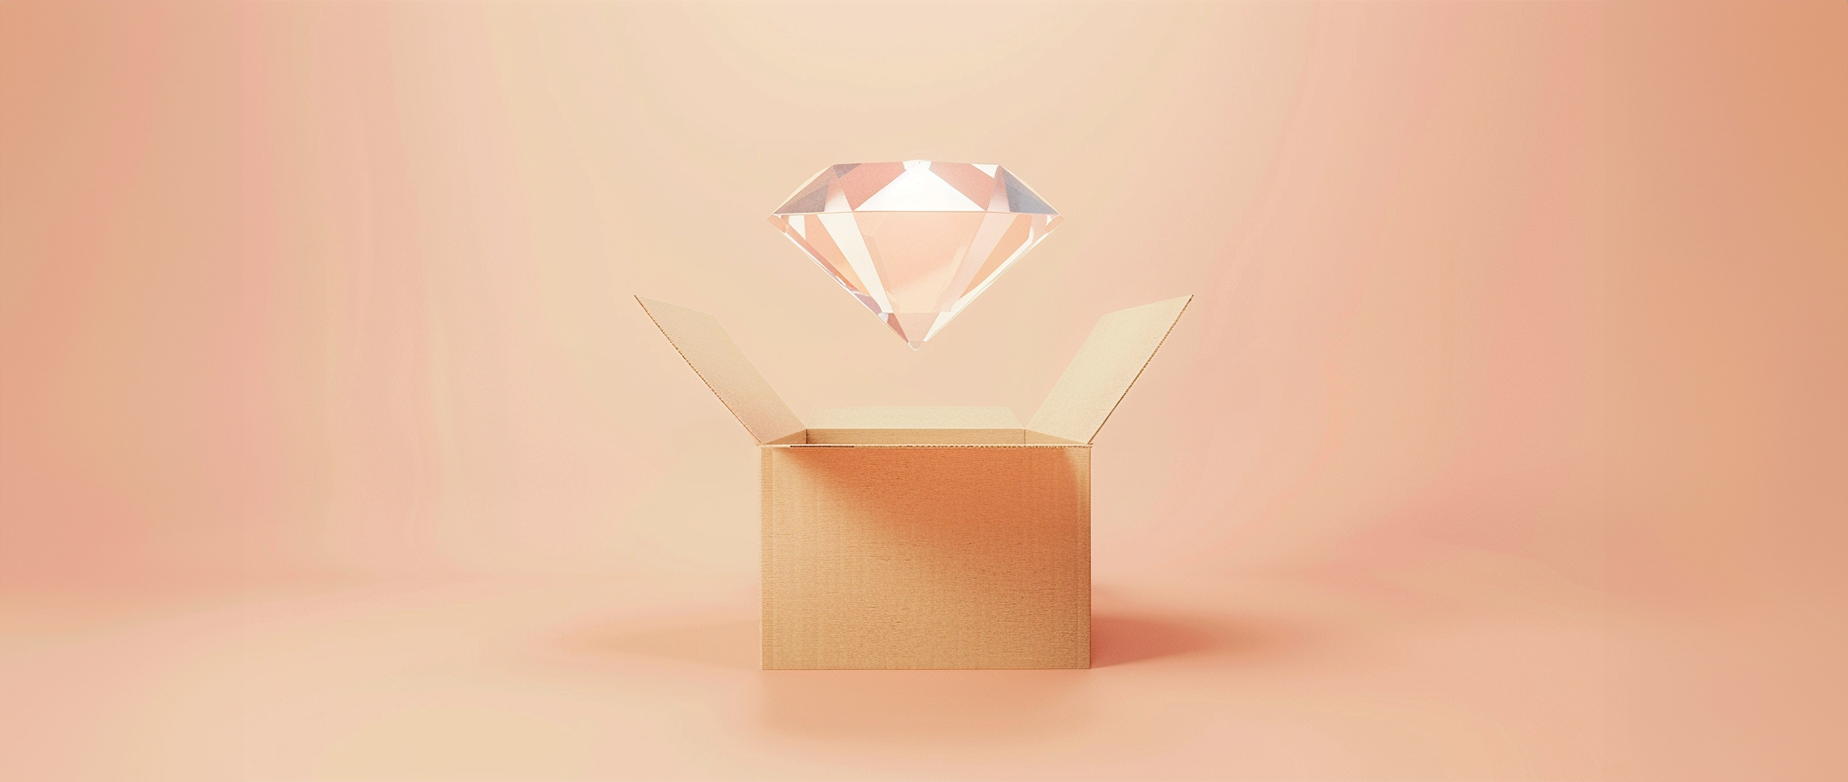 A diamond above an open cardboard box on a peach background.